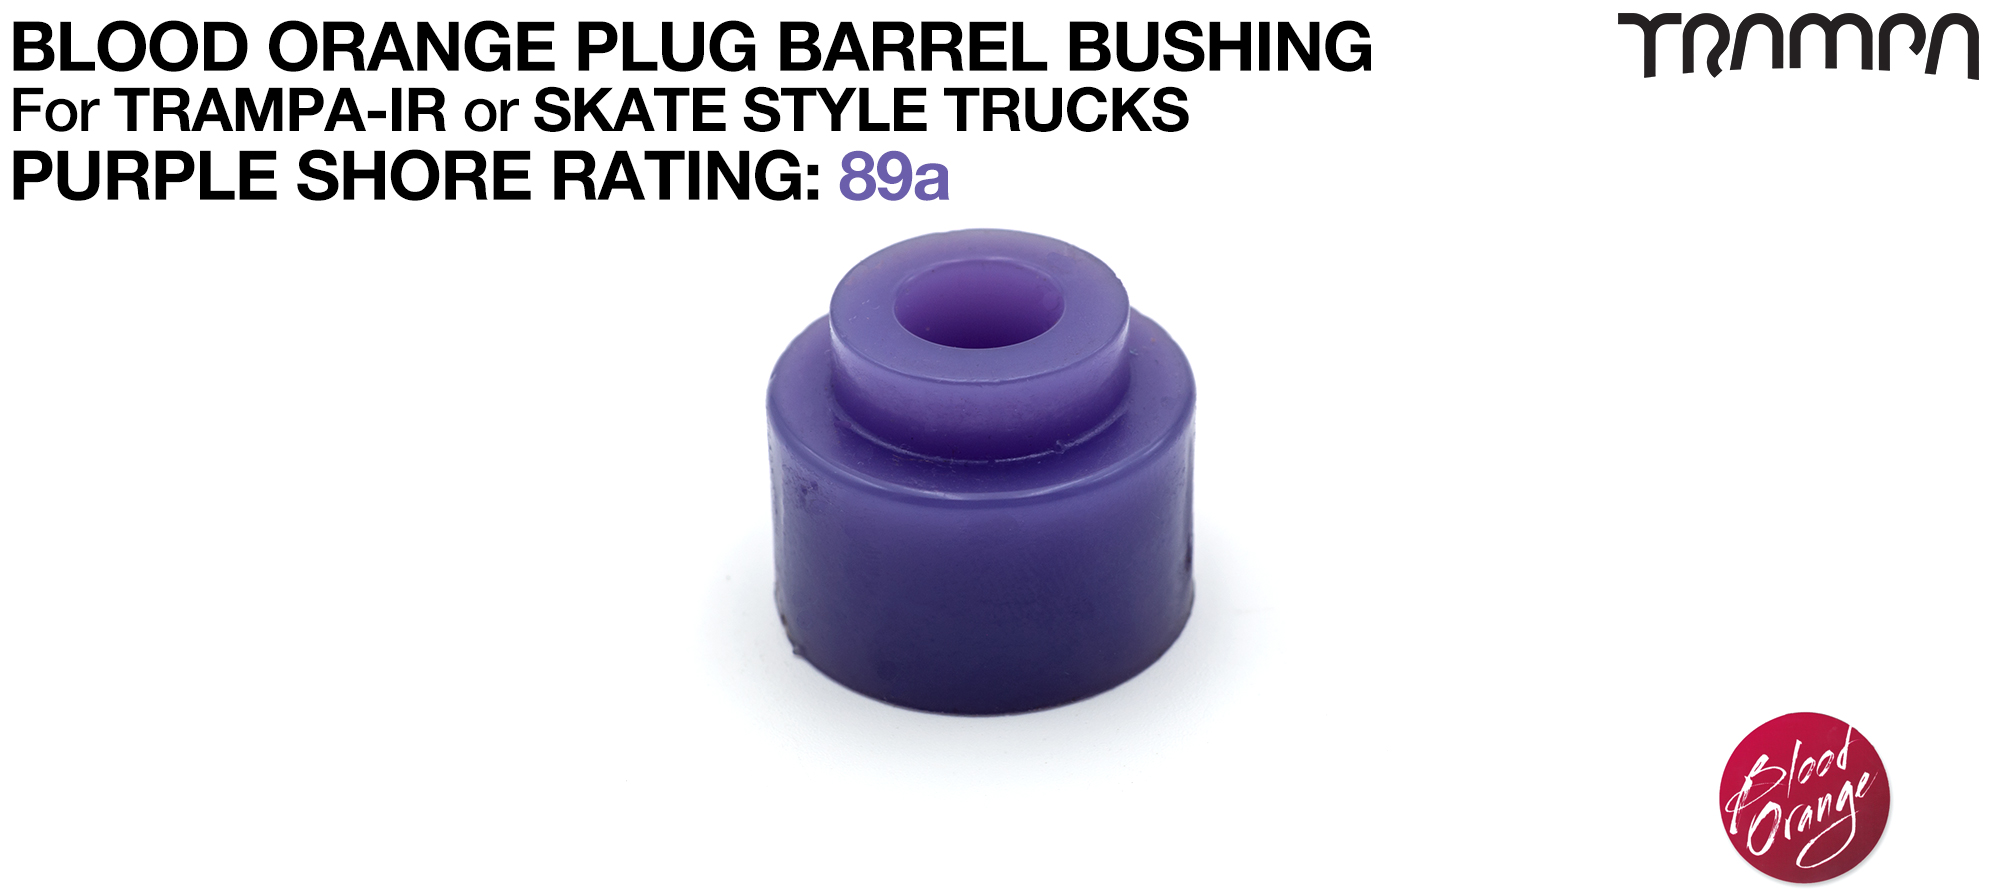 PLUG BARREL Bushings PURPLE - 89a  - OUT OF STOCK